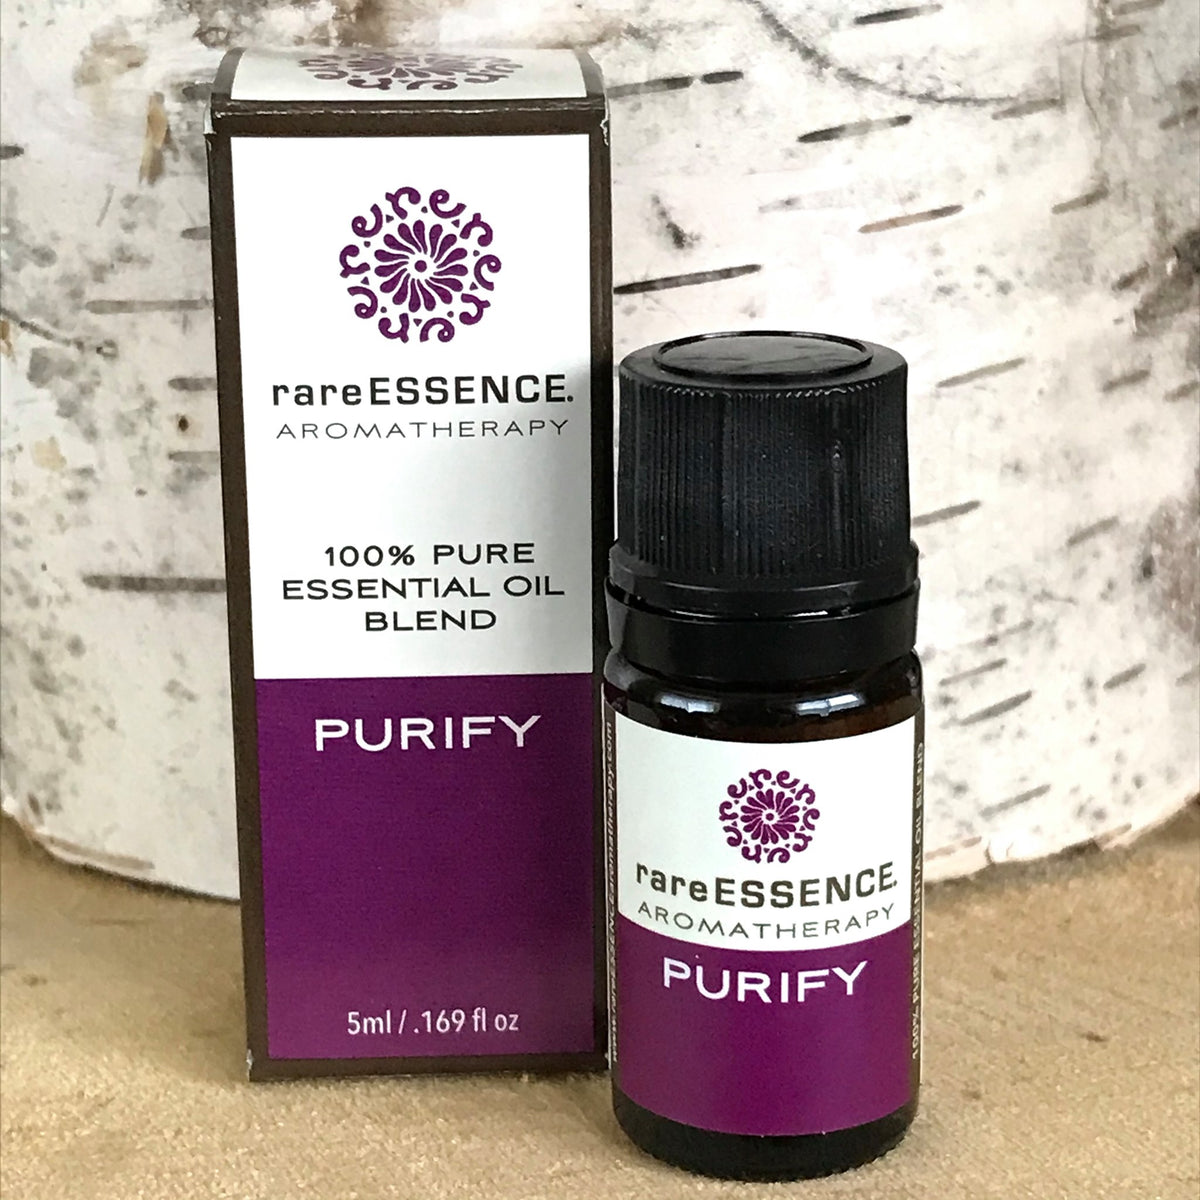 Purify essential oil blend is perfect for rejuvenation! A 100% pure essential oil blend of lemon, grapefruit, geranium, juniperberry, palmarosa, and cedarwood.